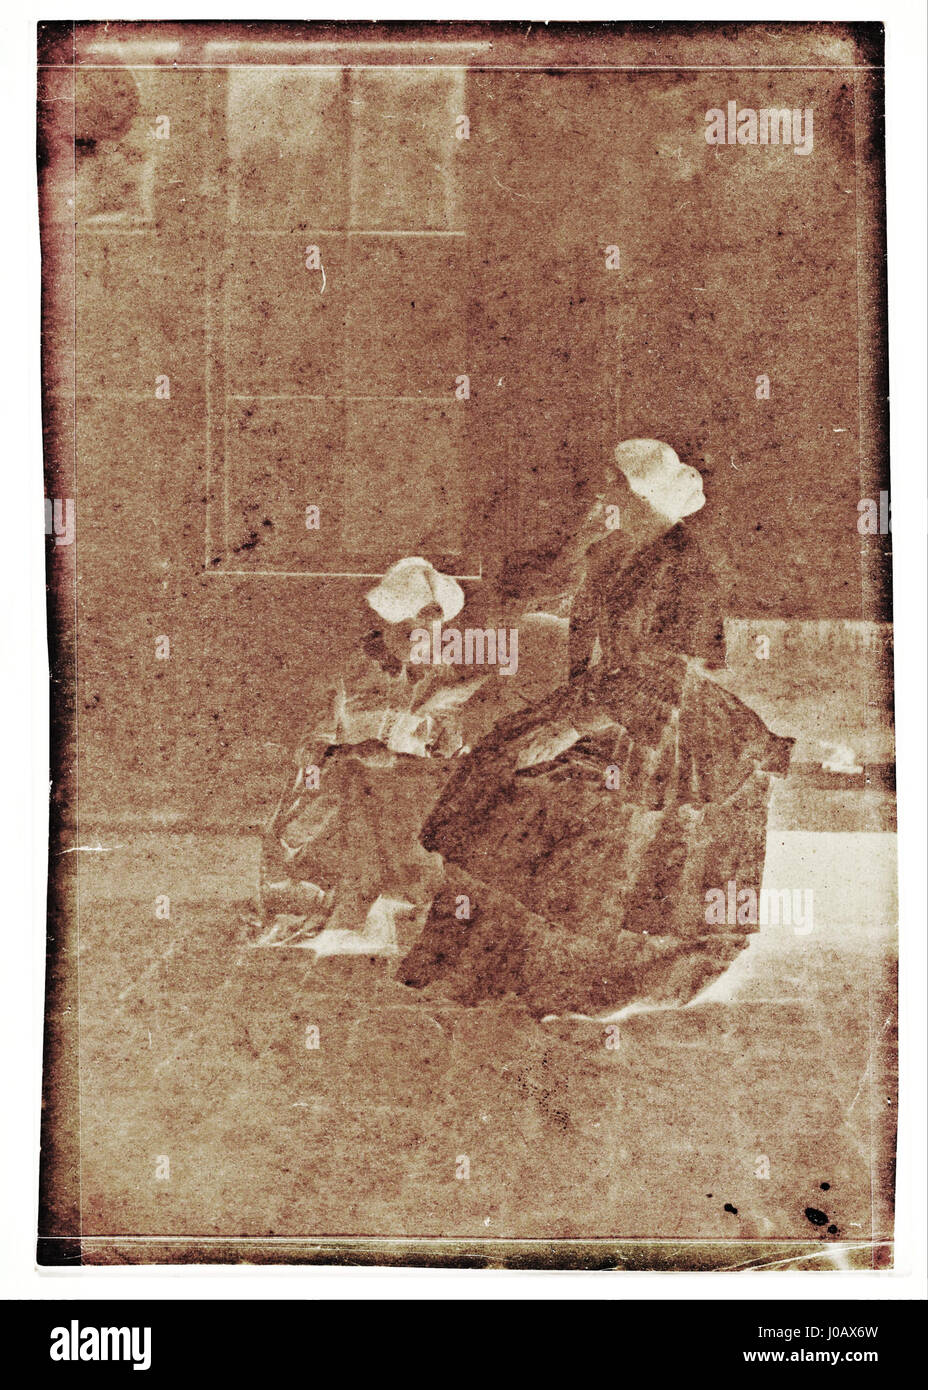 Charles Nègre - Women in a Courtyard -  (wwH5O-thVYsijA) Stock Photo